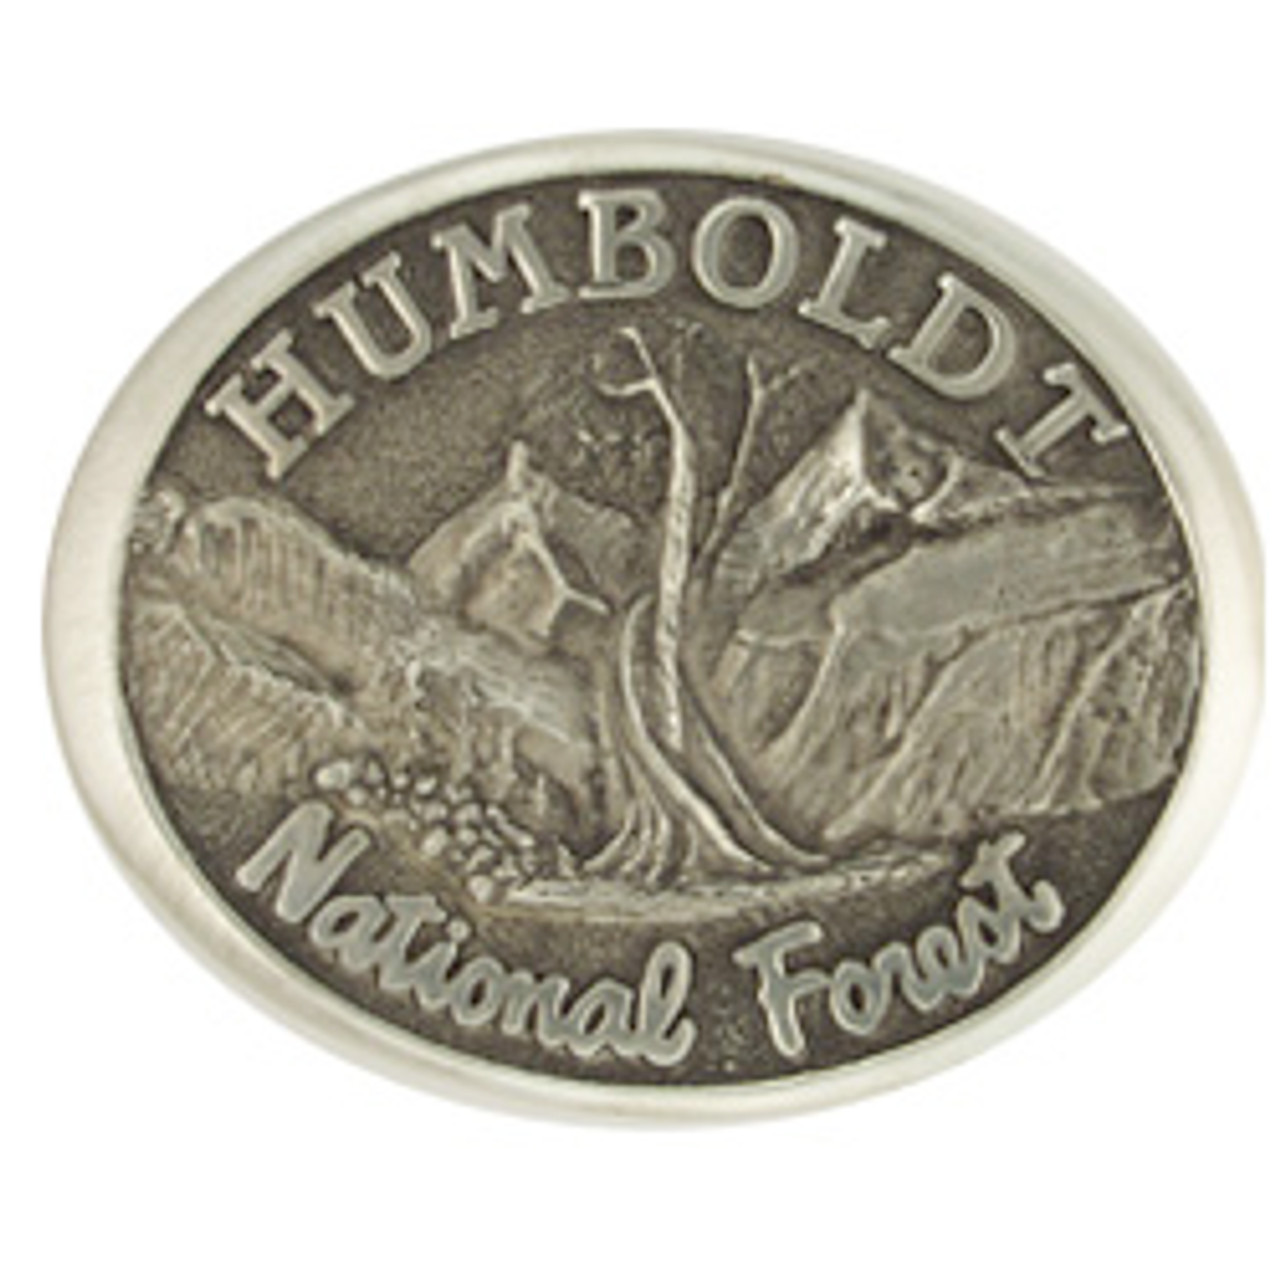 Humboldt National Forest Buckle